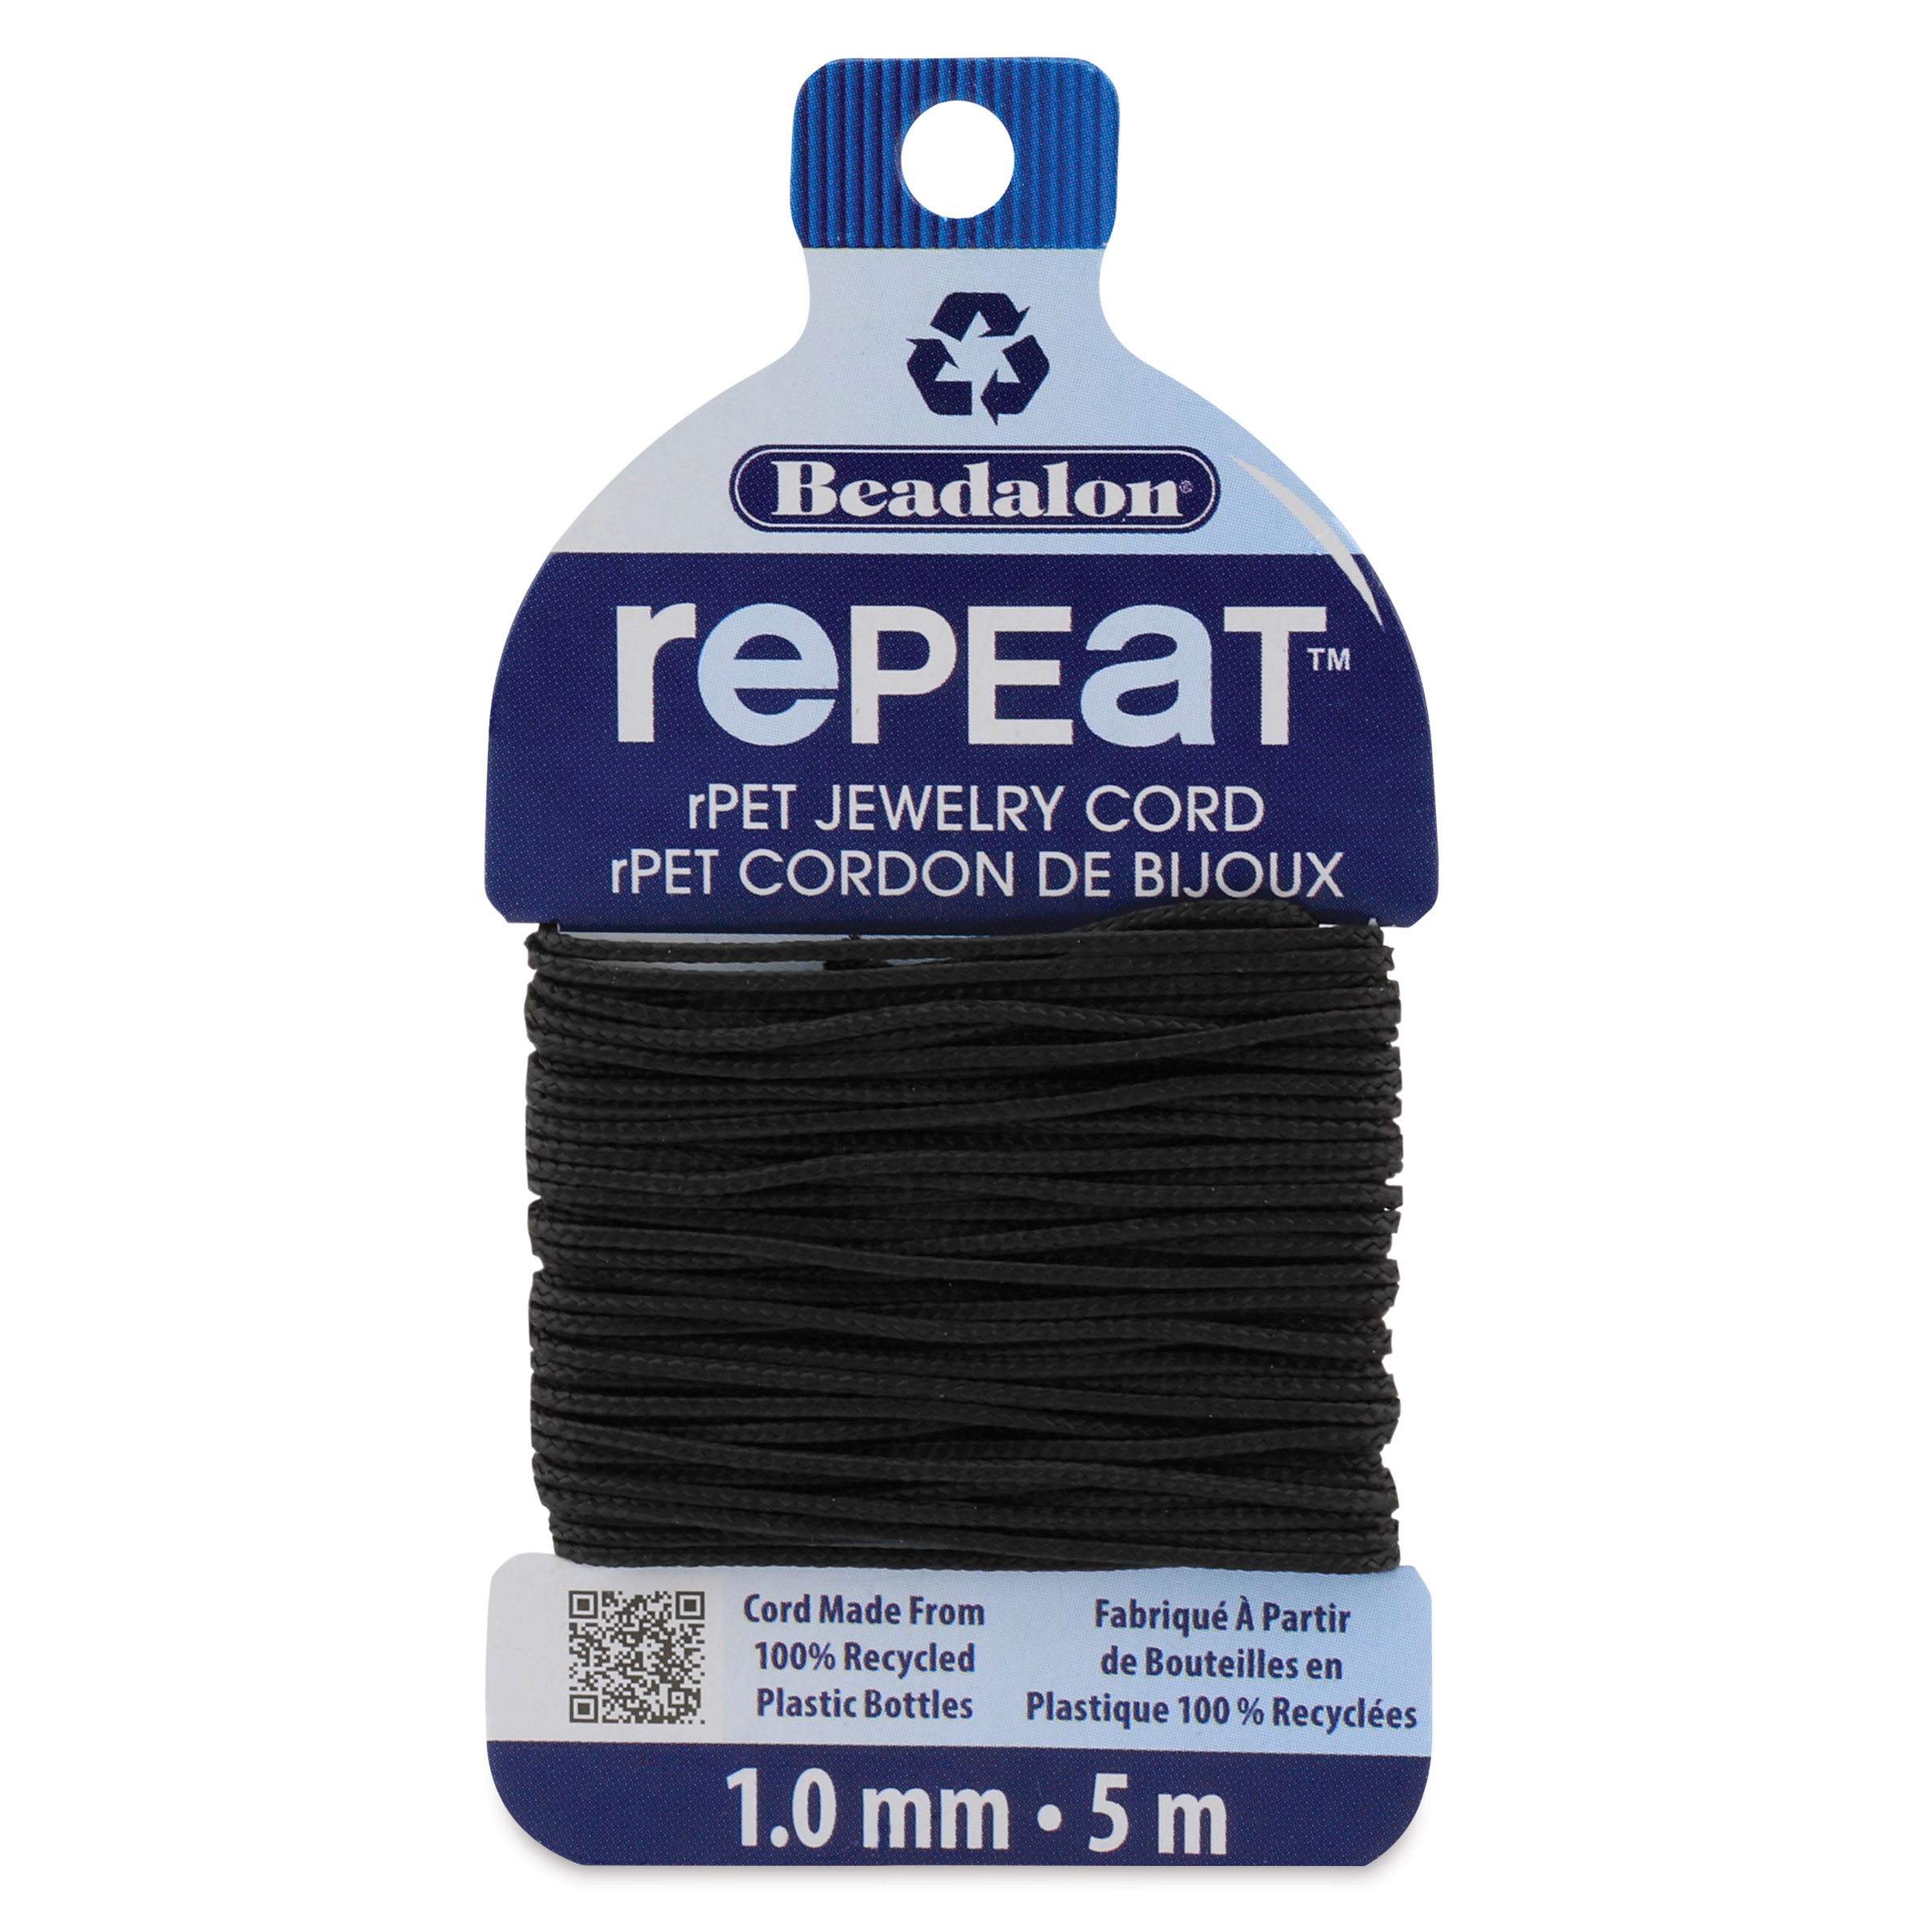 Beadalon Repeat Jewelry Cord - 1 mm x 5 M, Black